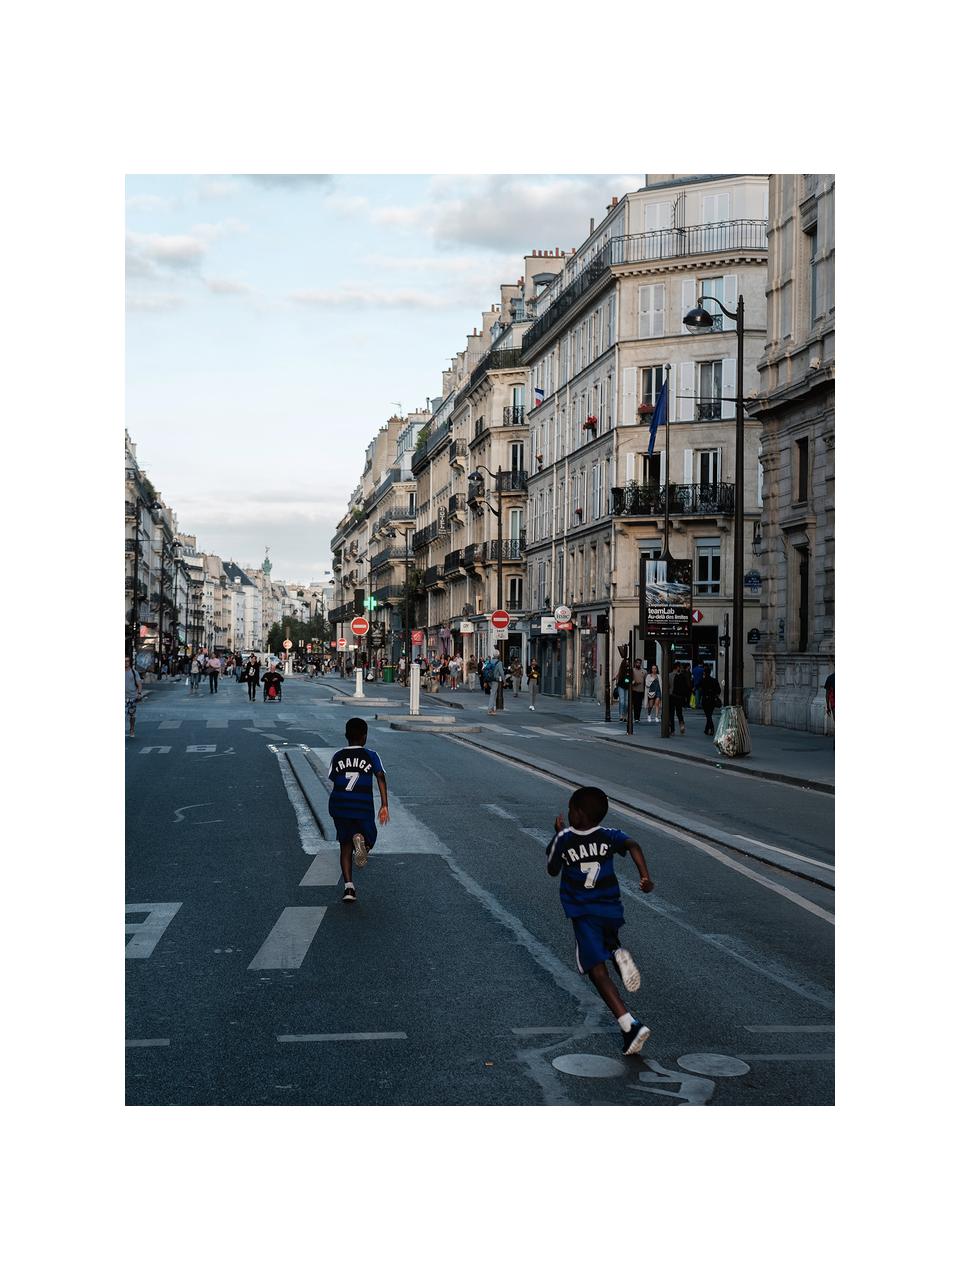 Bildband Streets of Paris, Papier, Hardcover, Mehrfarbig, 22 x 29 cm